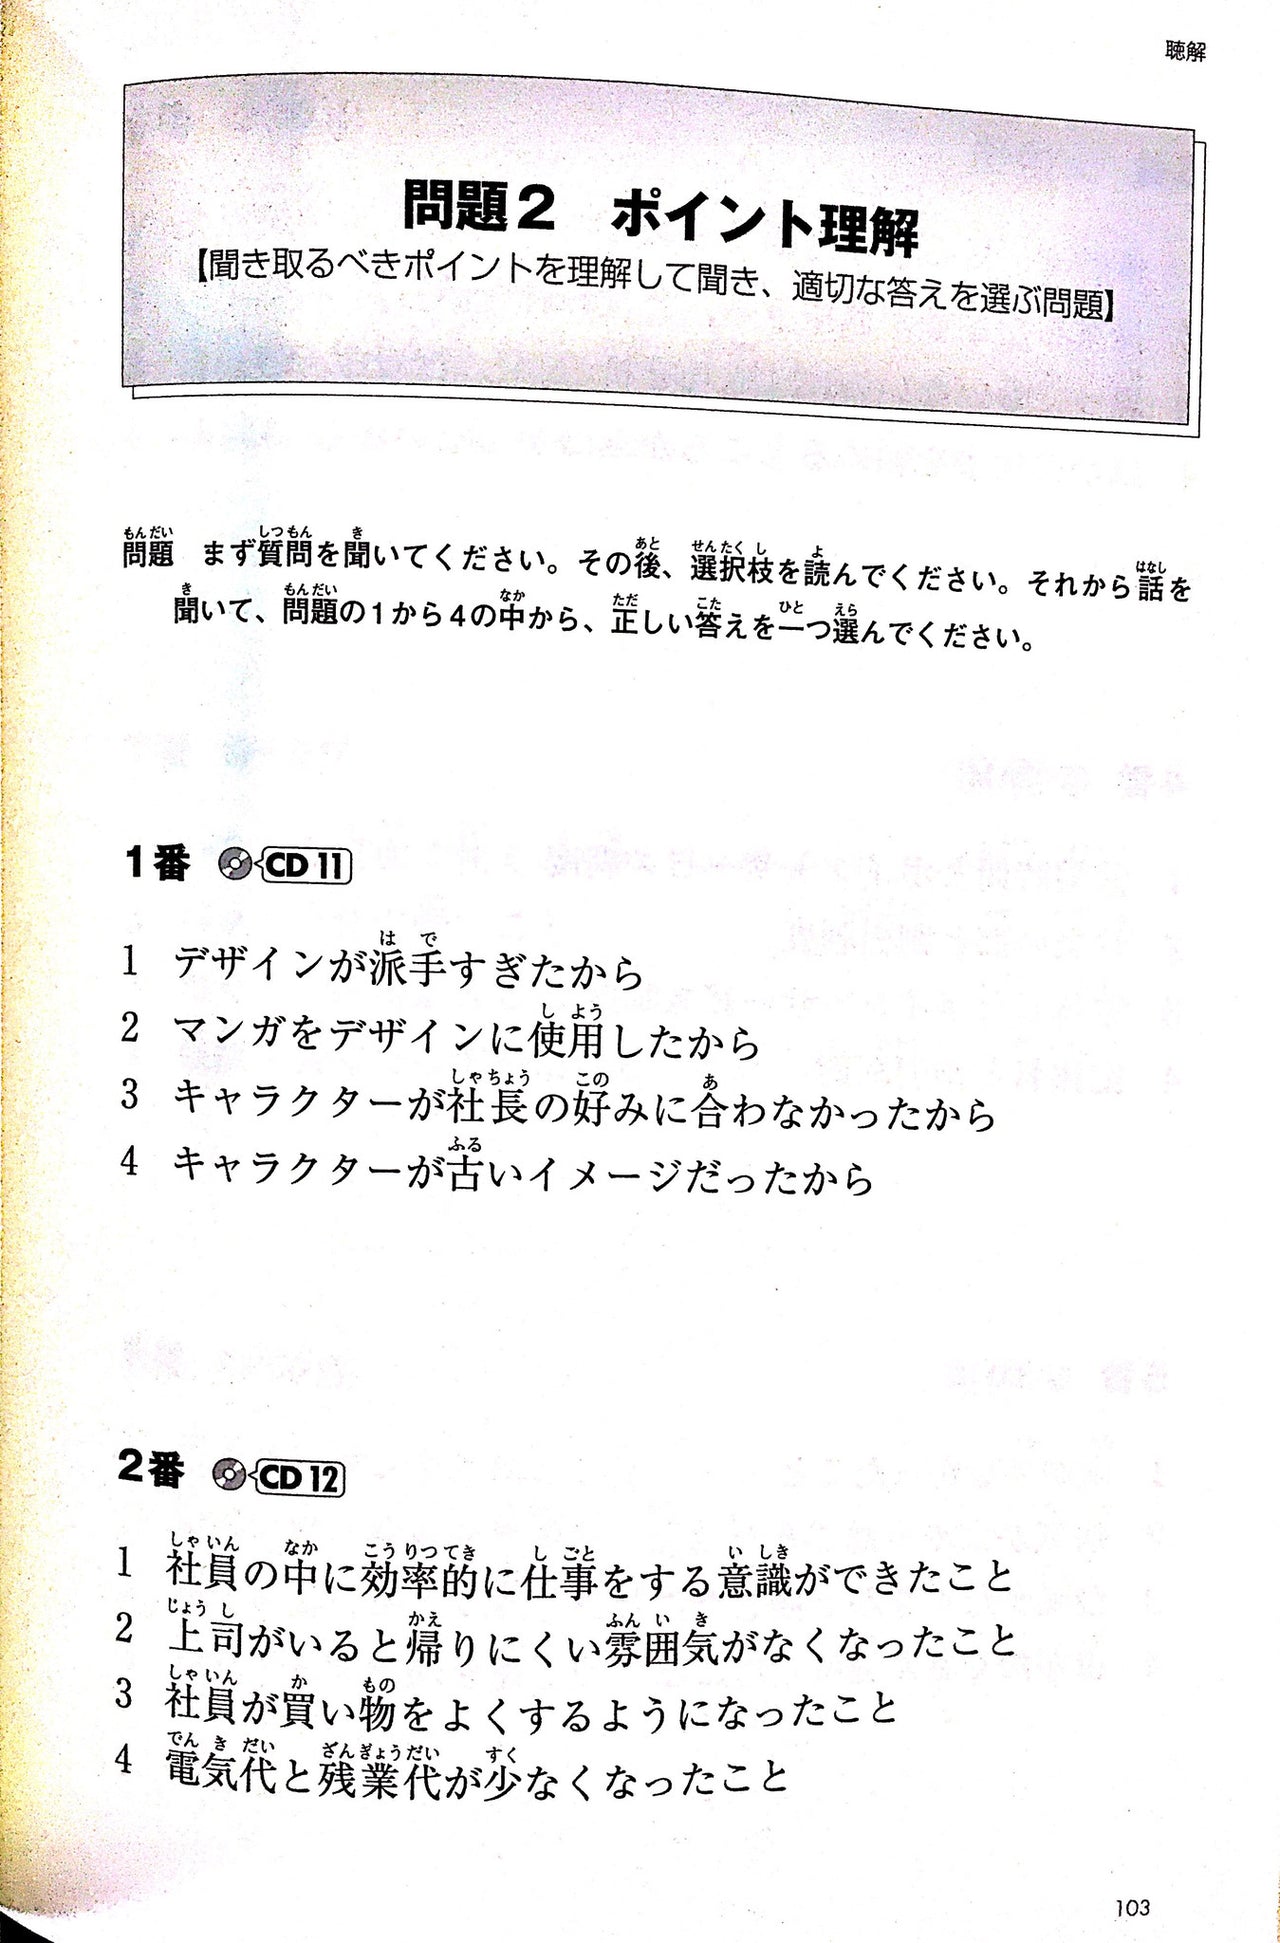 Nihongo Nouryokushiken N1 Yosoumondaishu JLPT N1 Complete Practice with CD [Revised Edition] - The Japan Shop